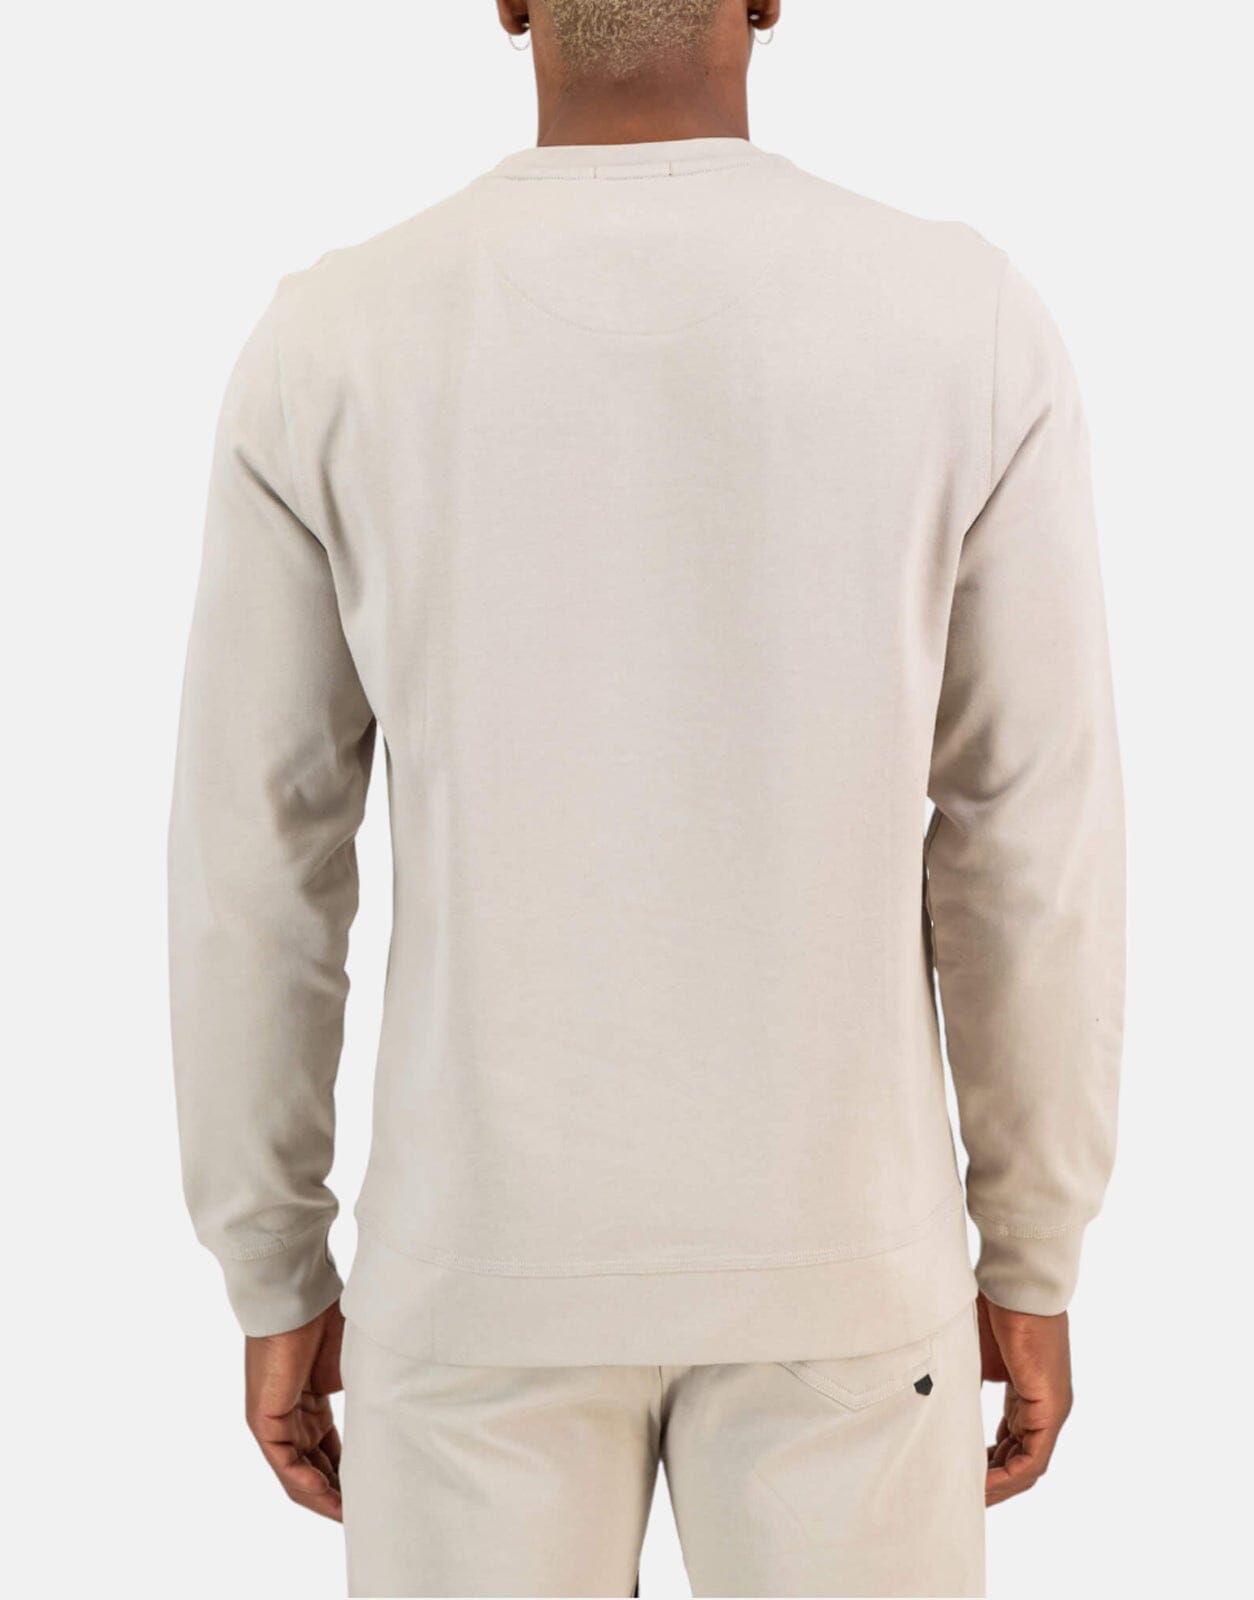 SPCC Vega Beige Sweatshirt - Subwear